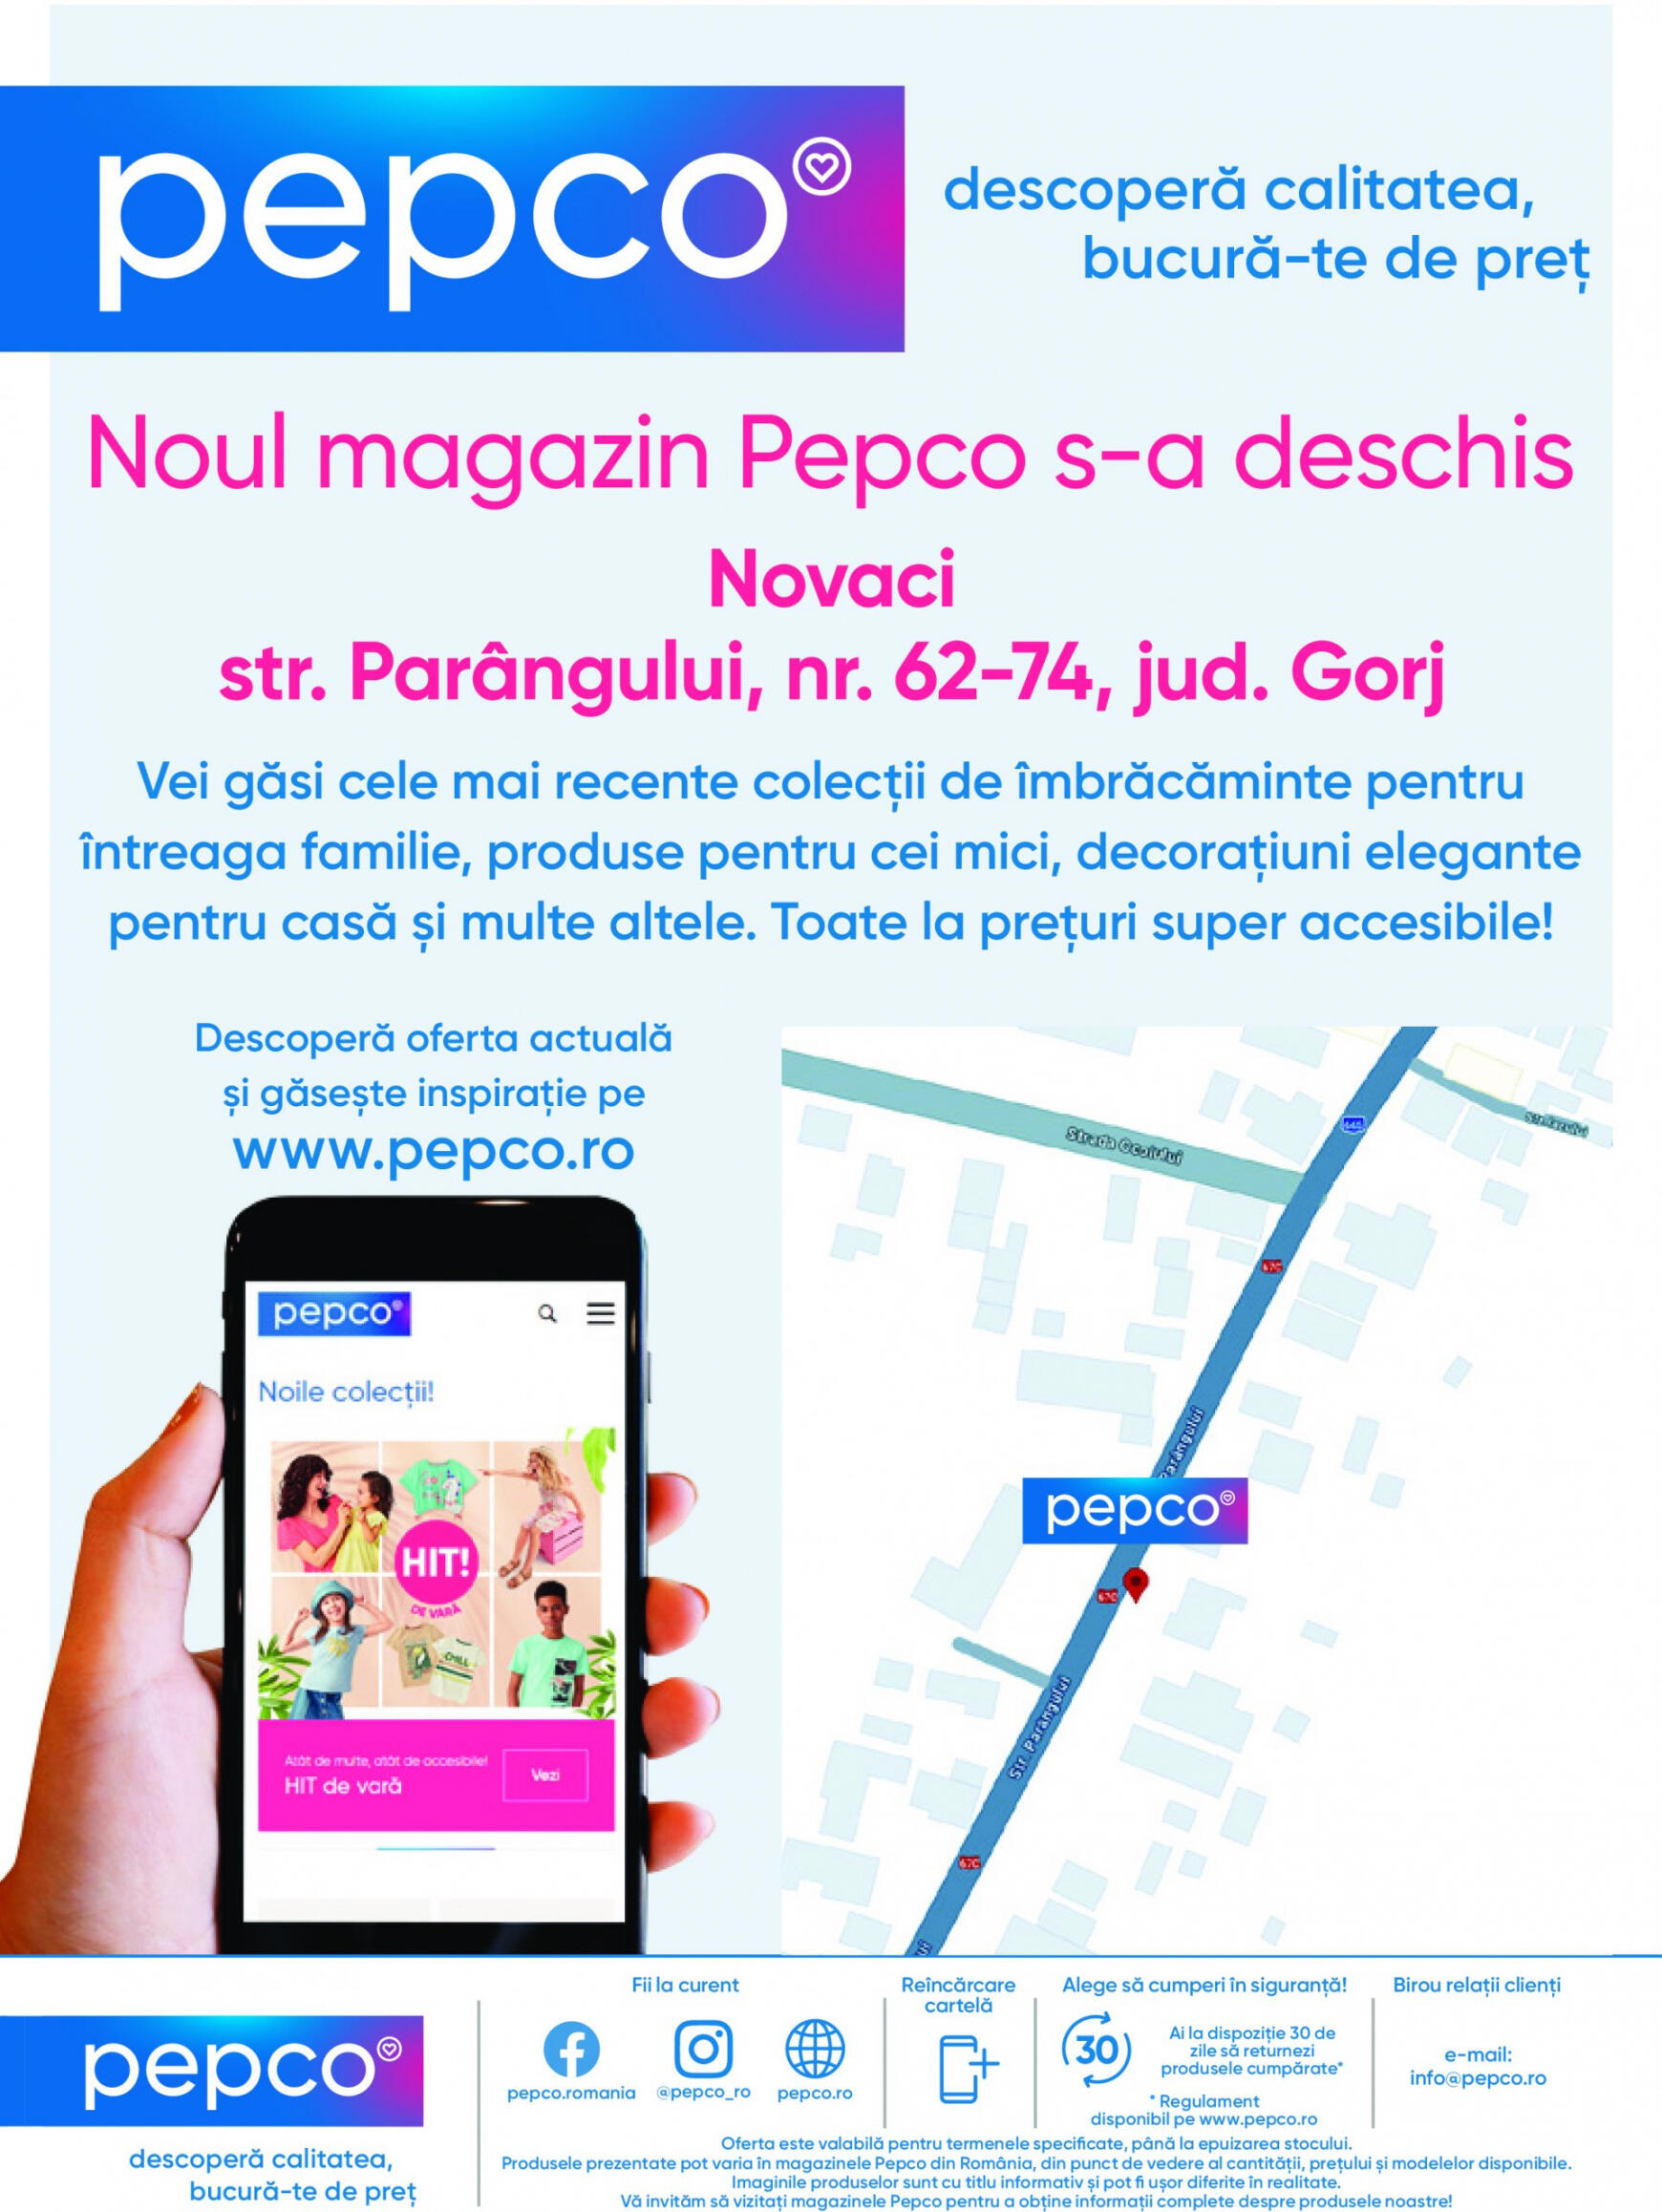 pepco - Catalog nou Pepco - Deschidere magazin Novaci 13.06. - 19.06. - page: 2